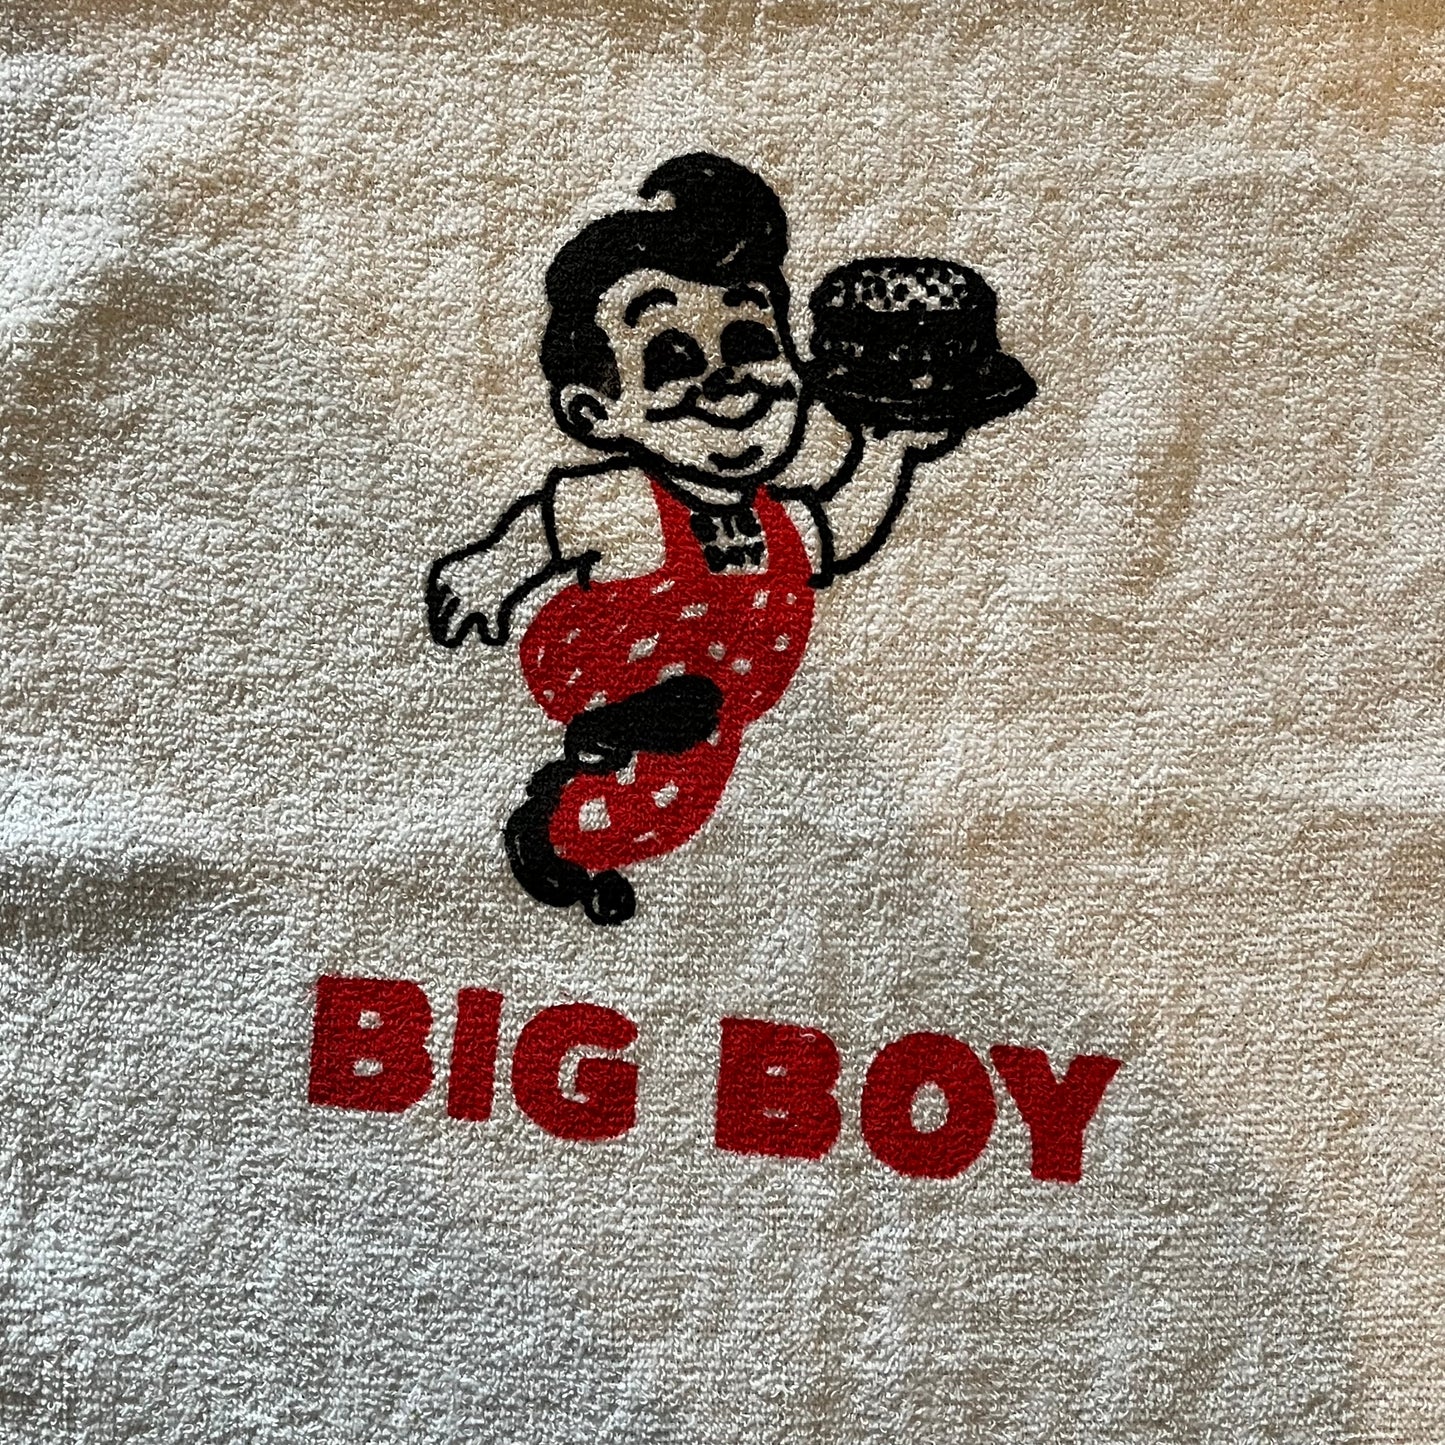 【USA vintage】BIG BOY Face Towel